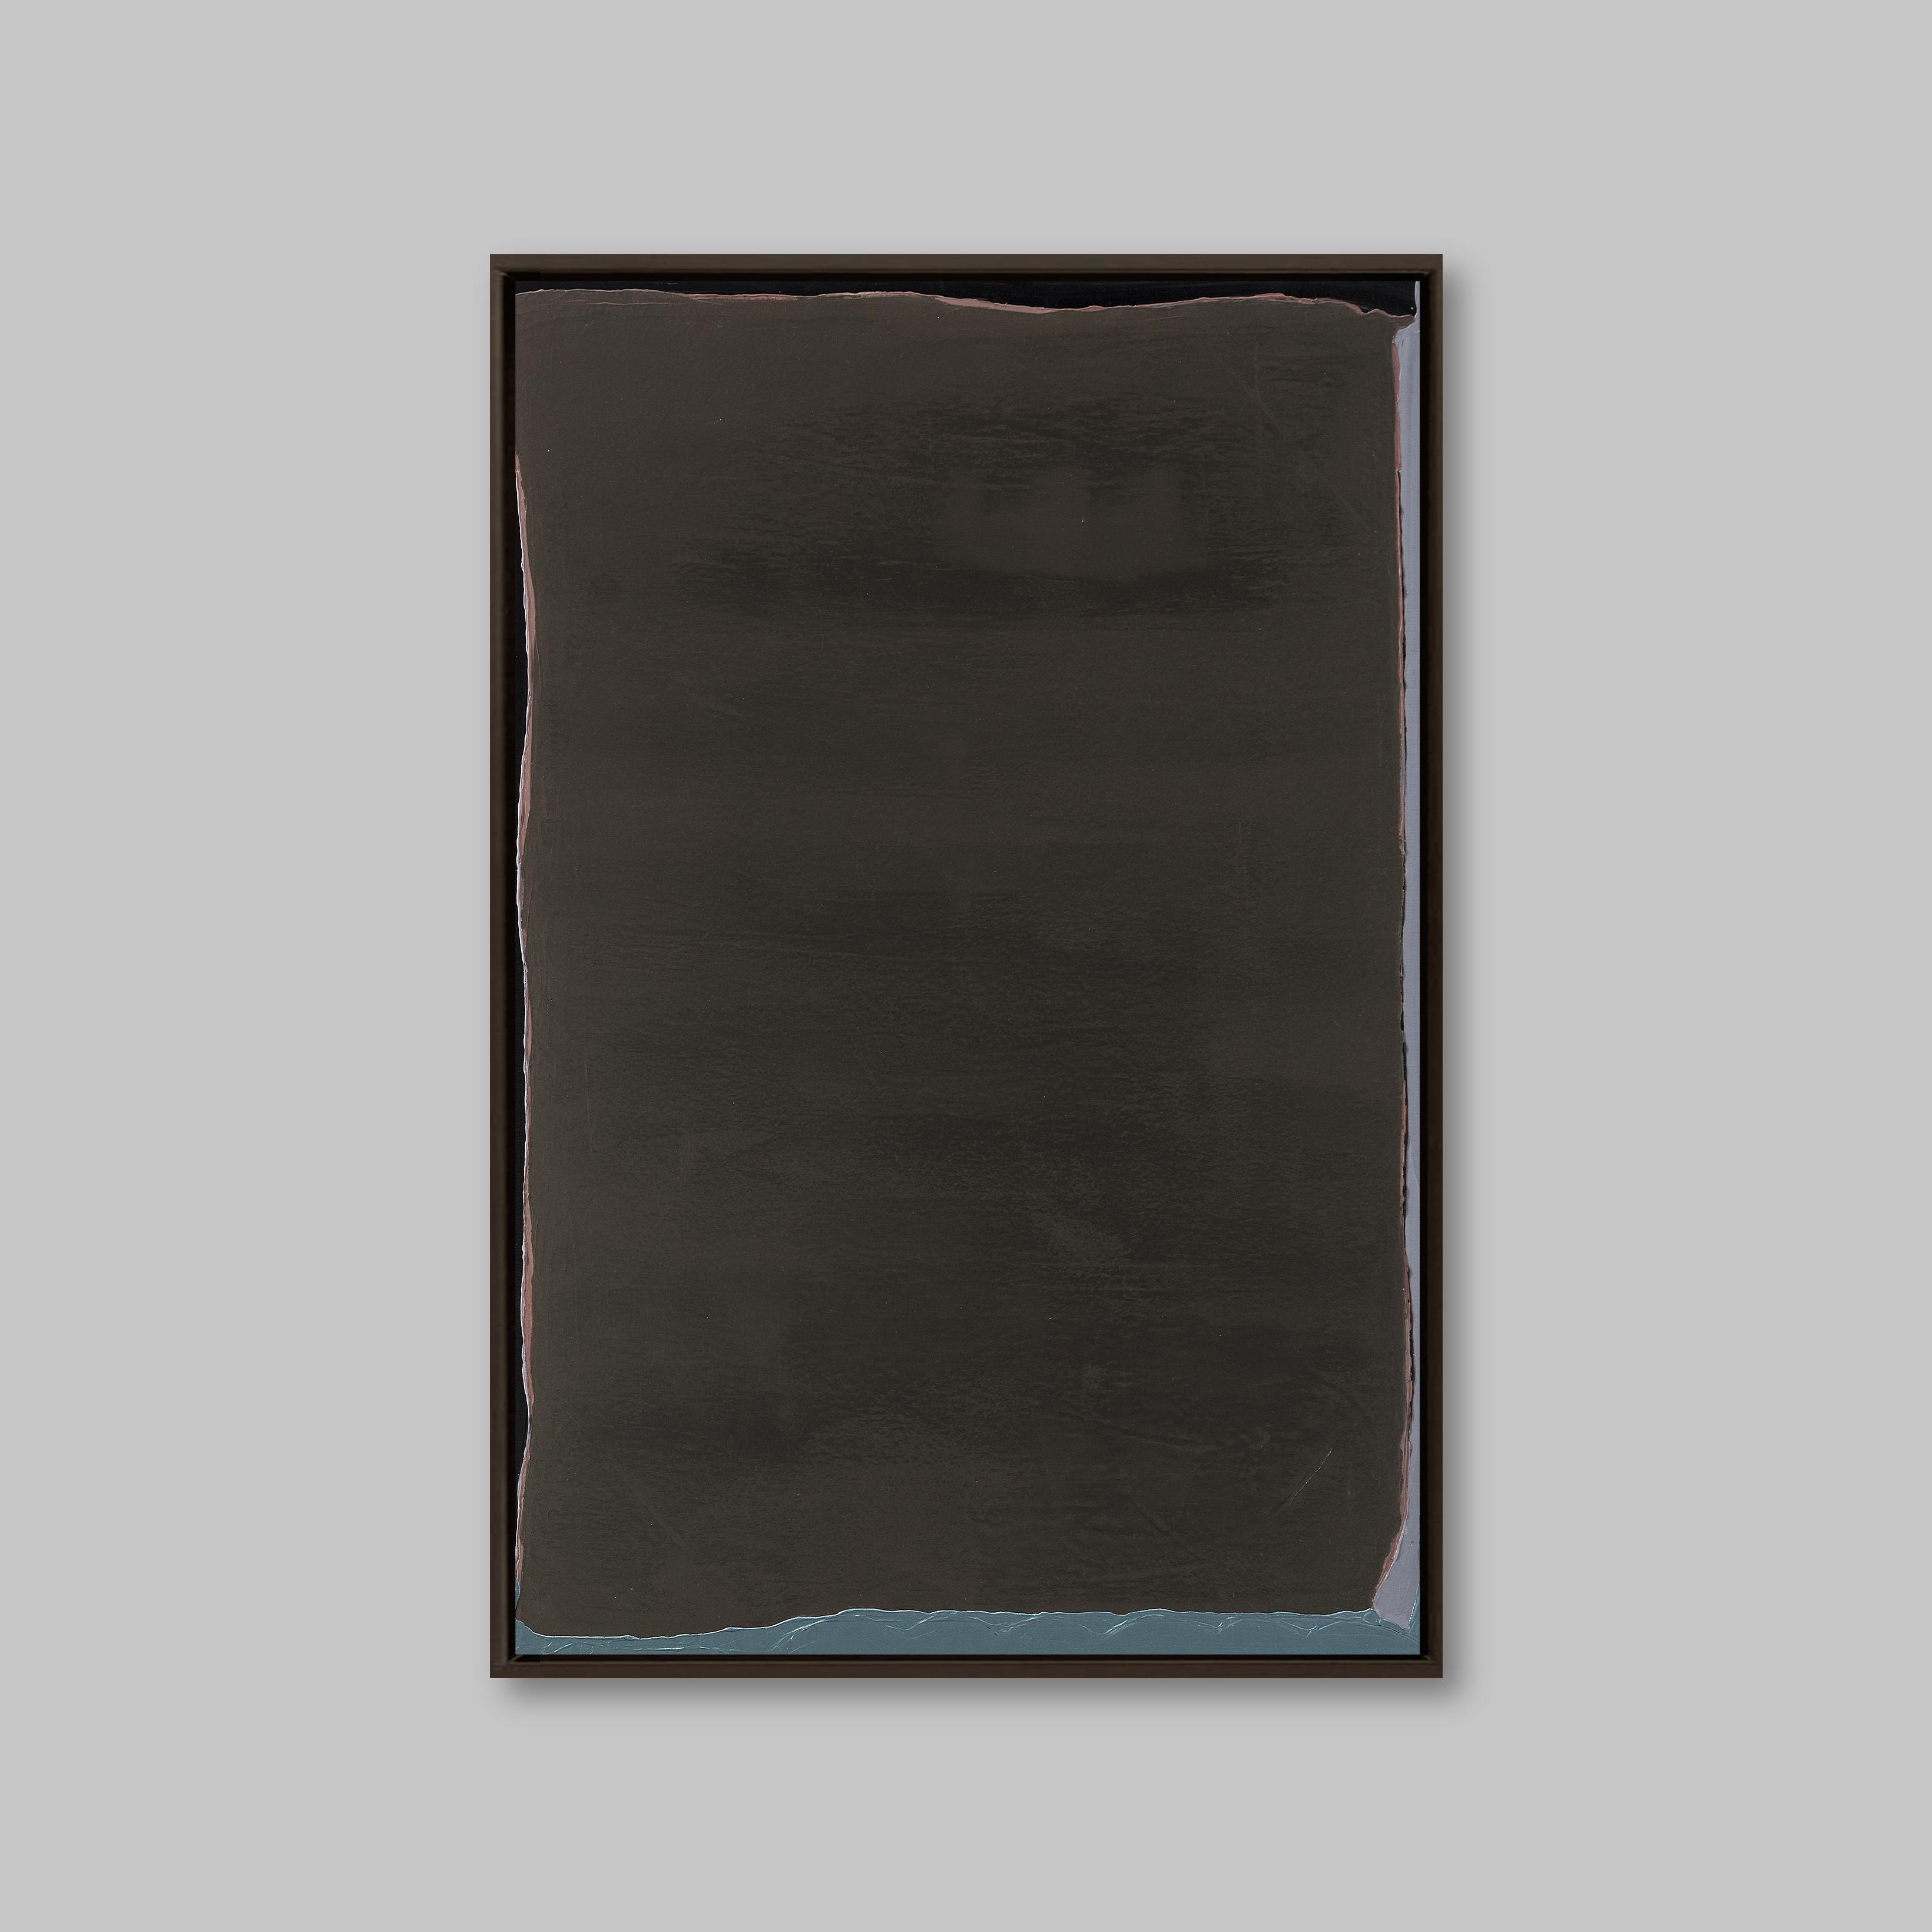 Glitch Exodus 26, 2015
115 x 90 cm
Peinture sur toile